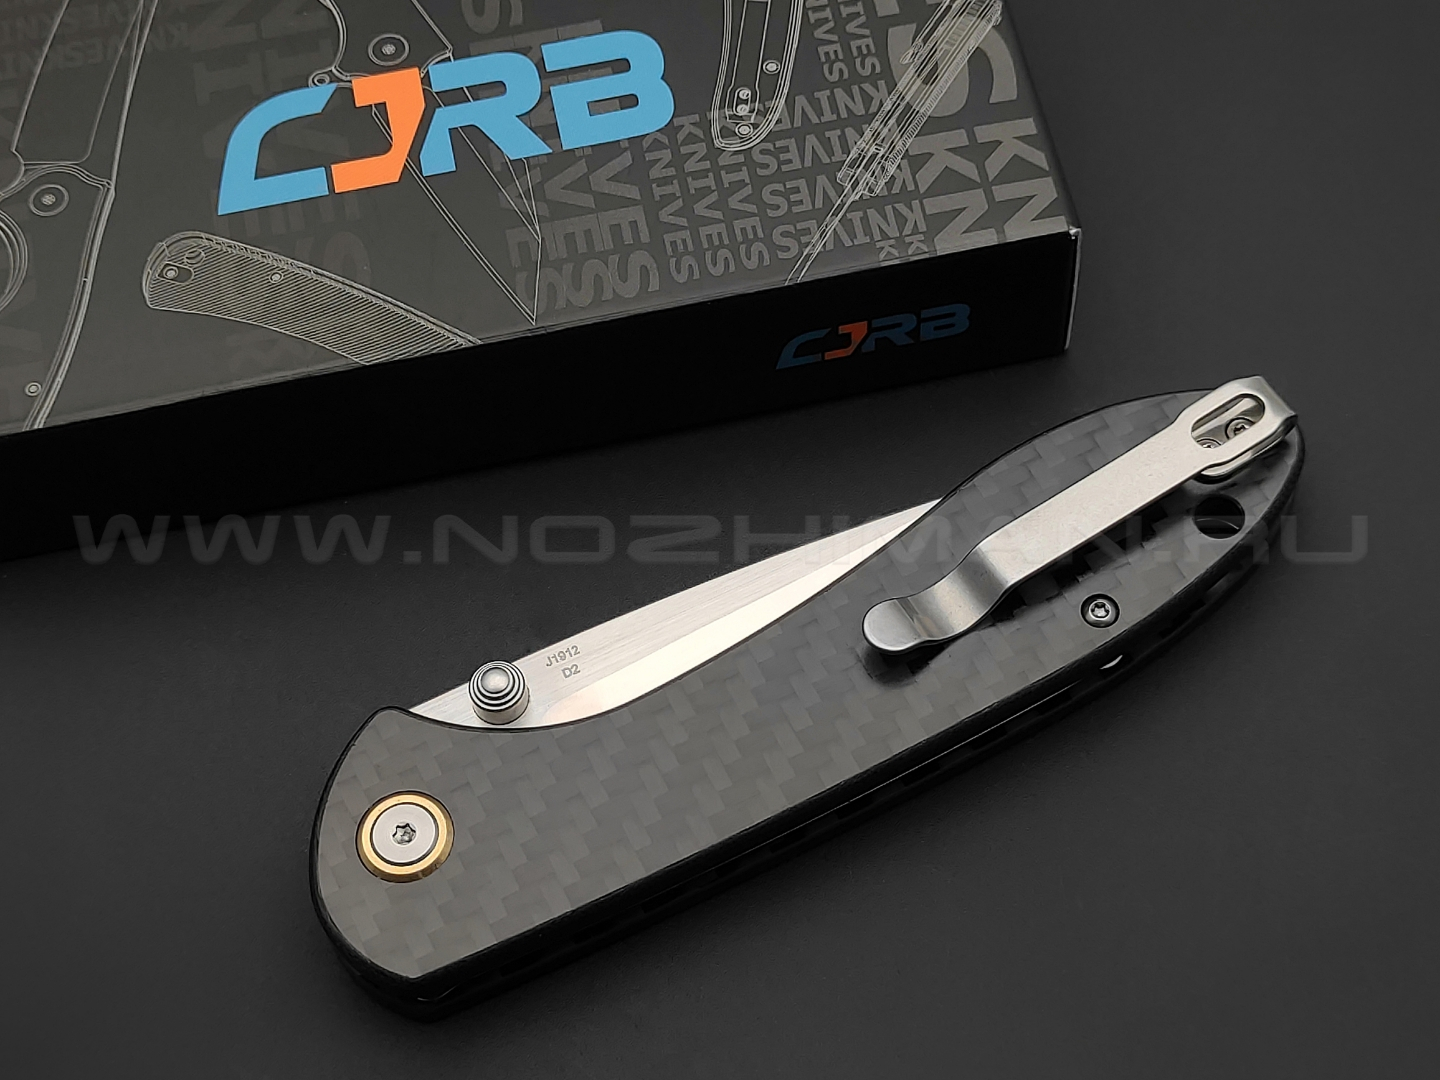 Нож CJRB Feldspar J1912-CF сталь D2, рукоять Carbon fiber